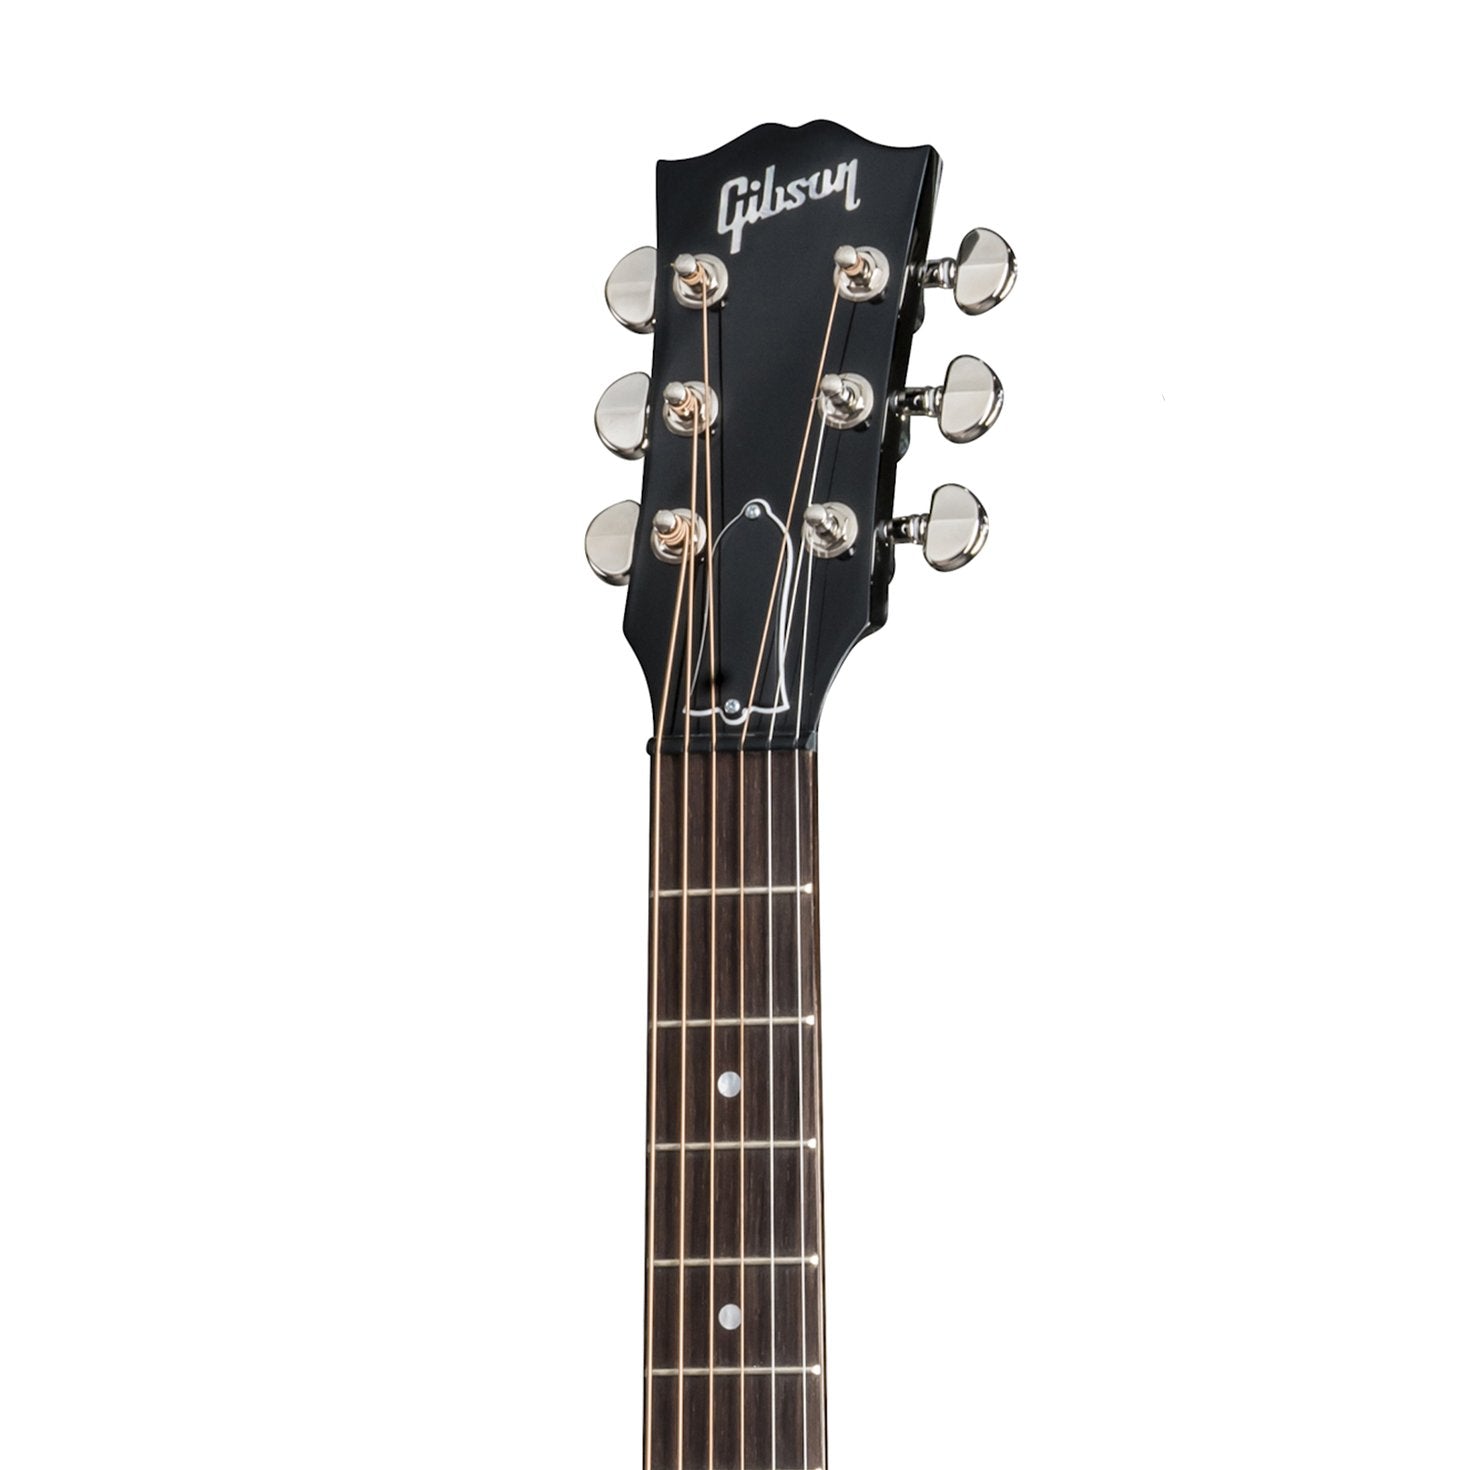 Gibson Montana 2019 J-45 Standard Acoustic Guitar, Vintage Sunburst, GIBSON, ACOUSTIC GUITAR, gibson-acoustic-guitar-g06-rs45vsn19, ZOSO MUSIC SDN BHD